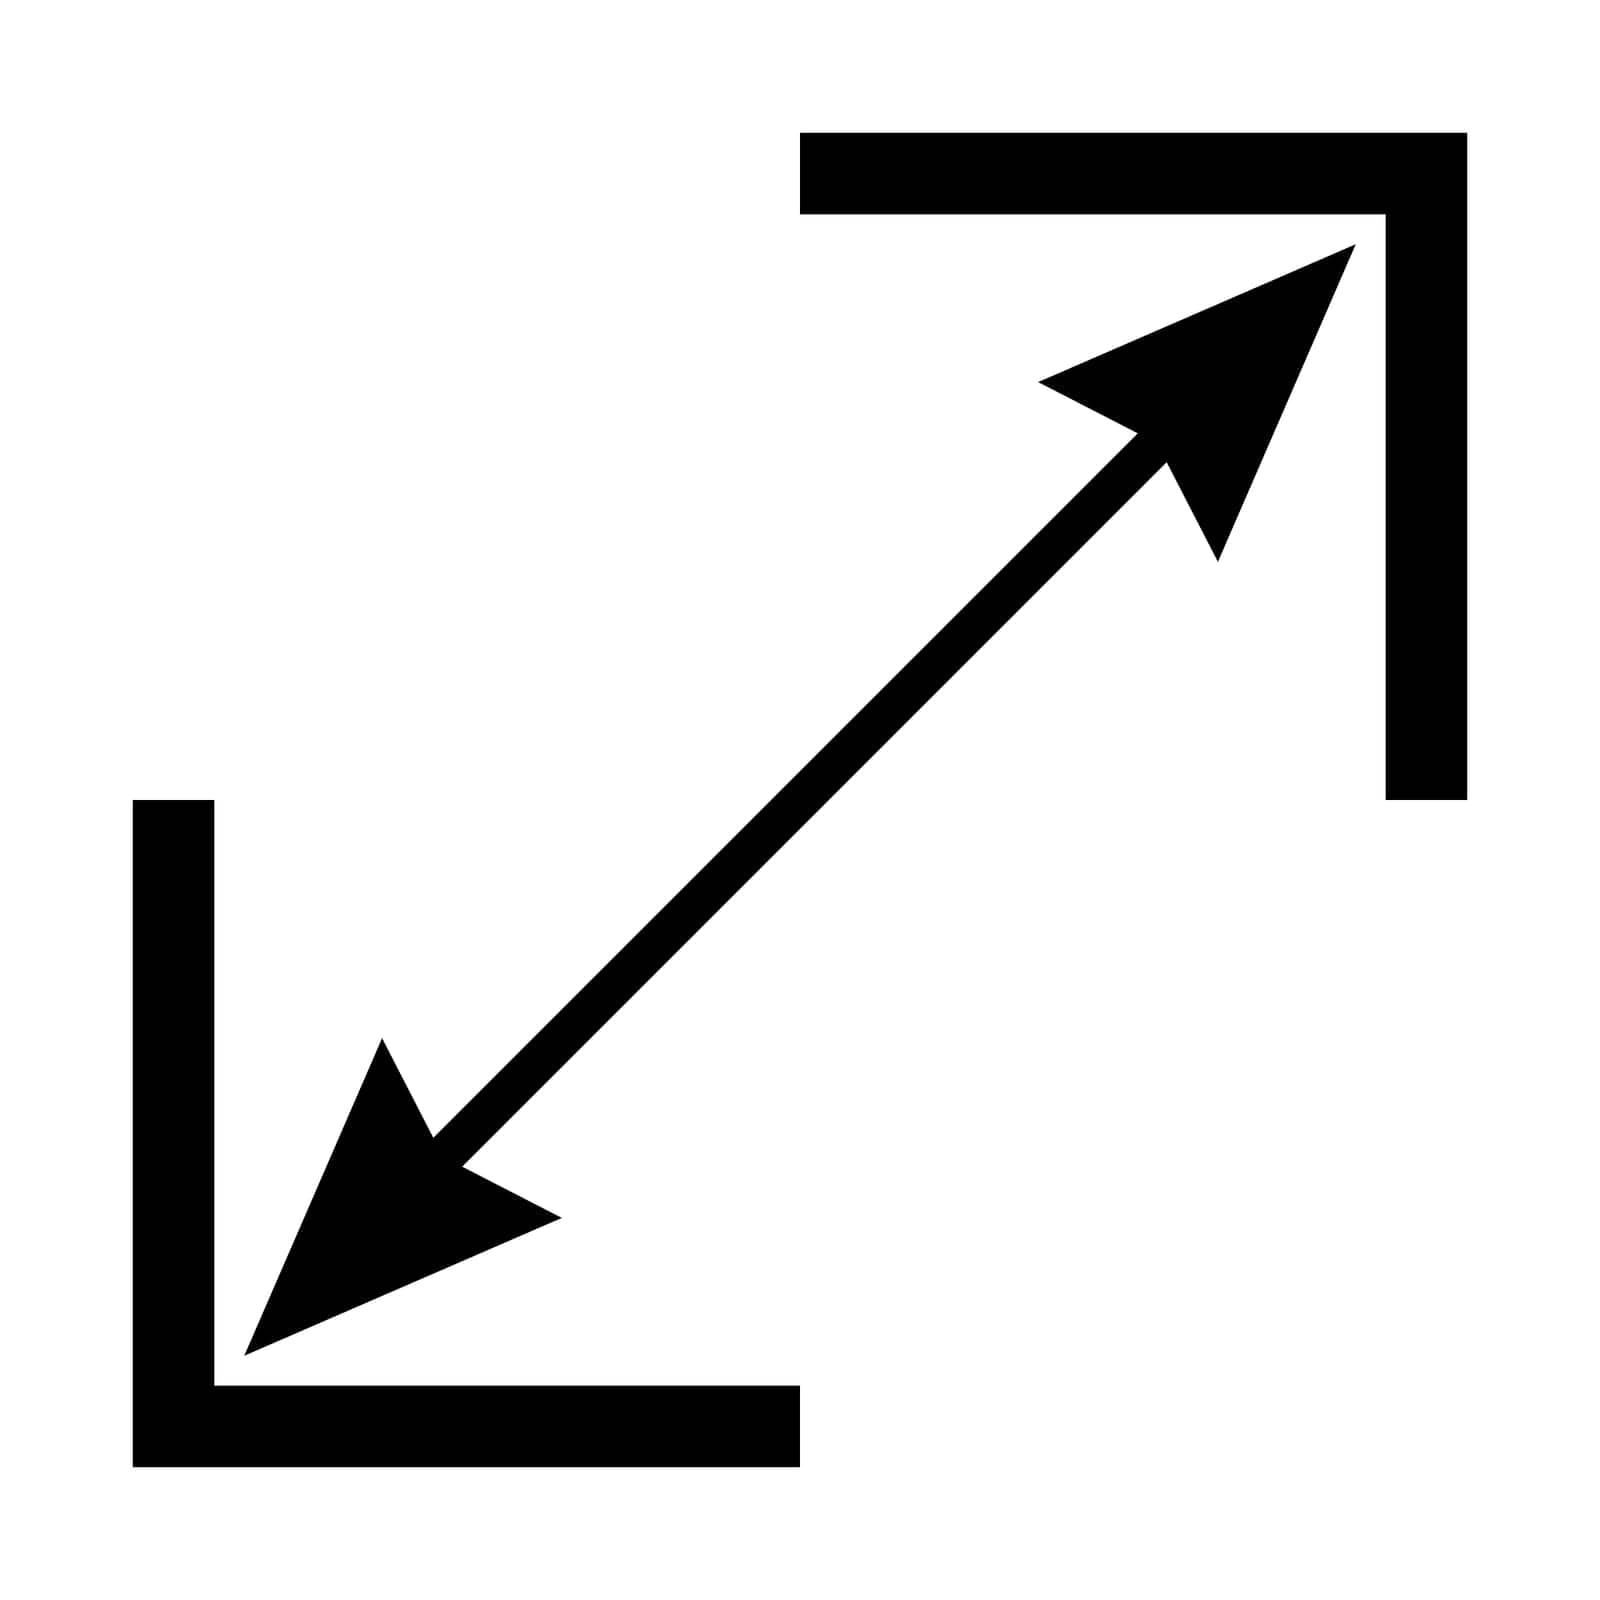 Diagonal icon, diagonal line with arrows pointing to corners square by koksikoks